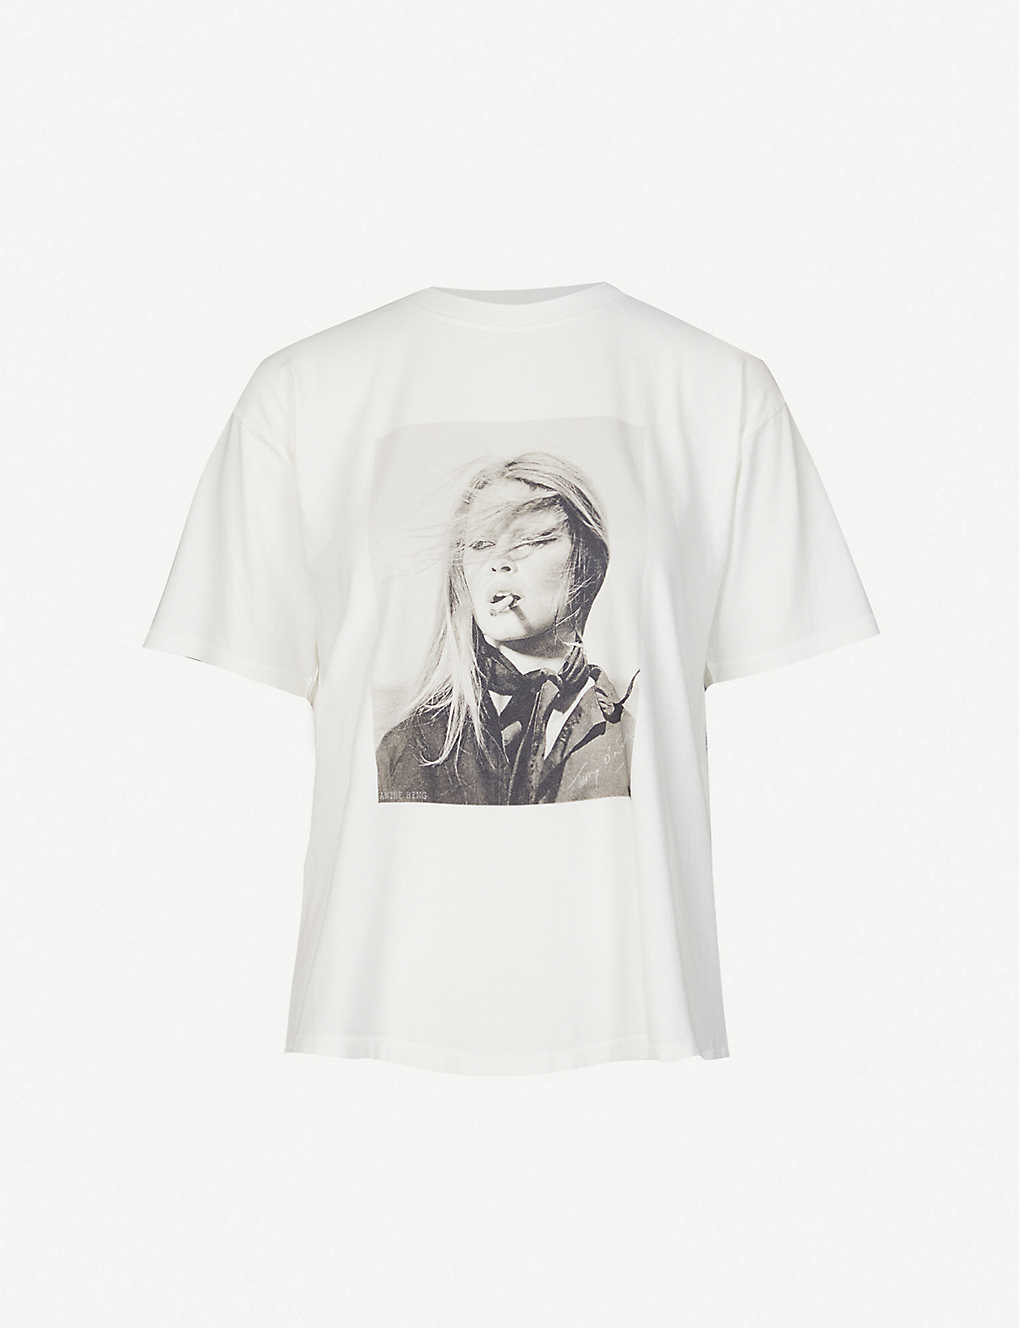 Anine Bing Graphic T-Shirt - Oxford Street